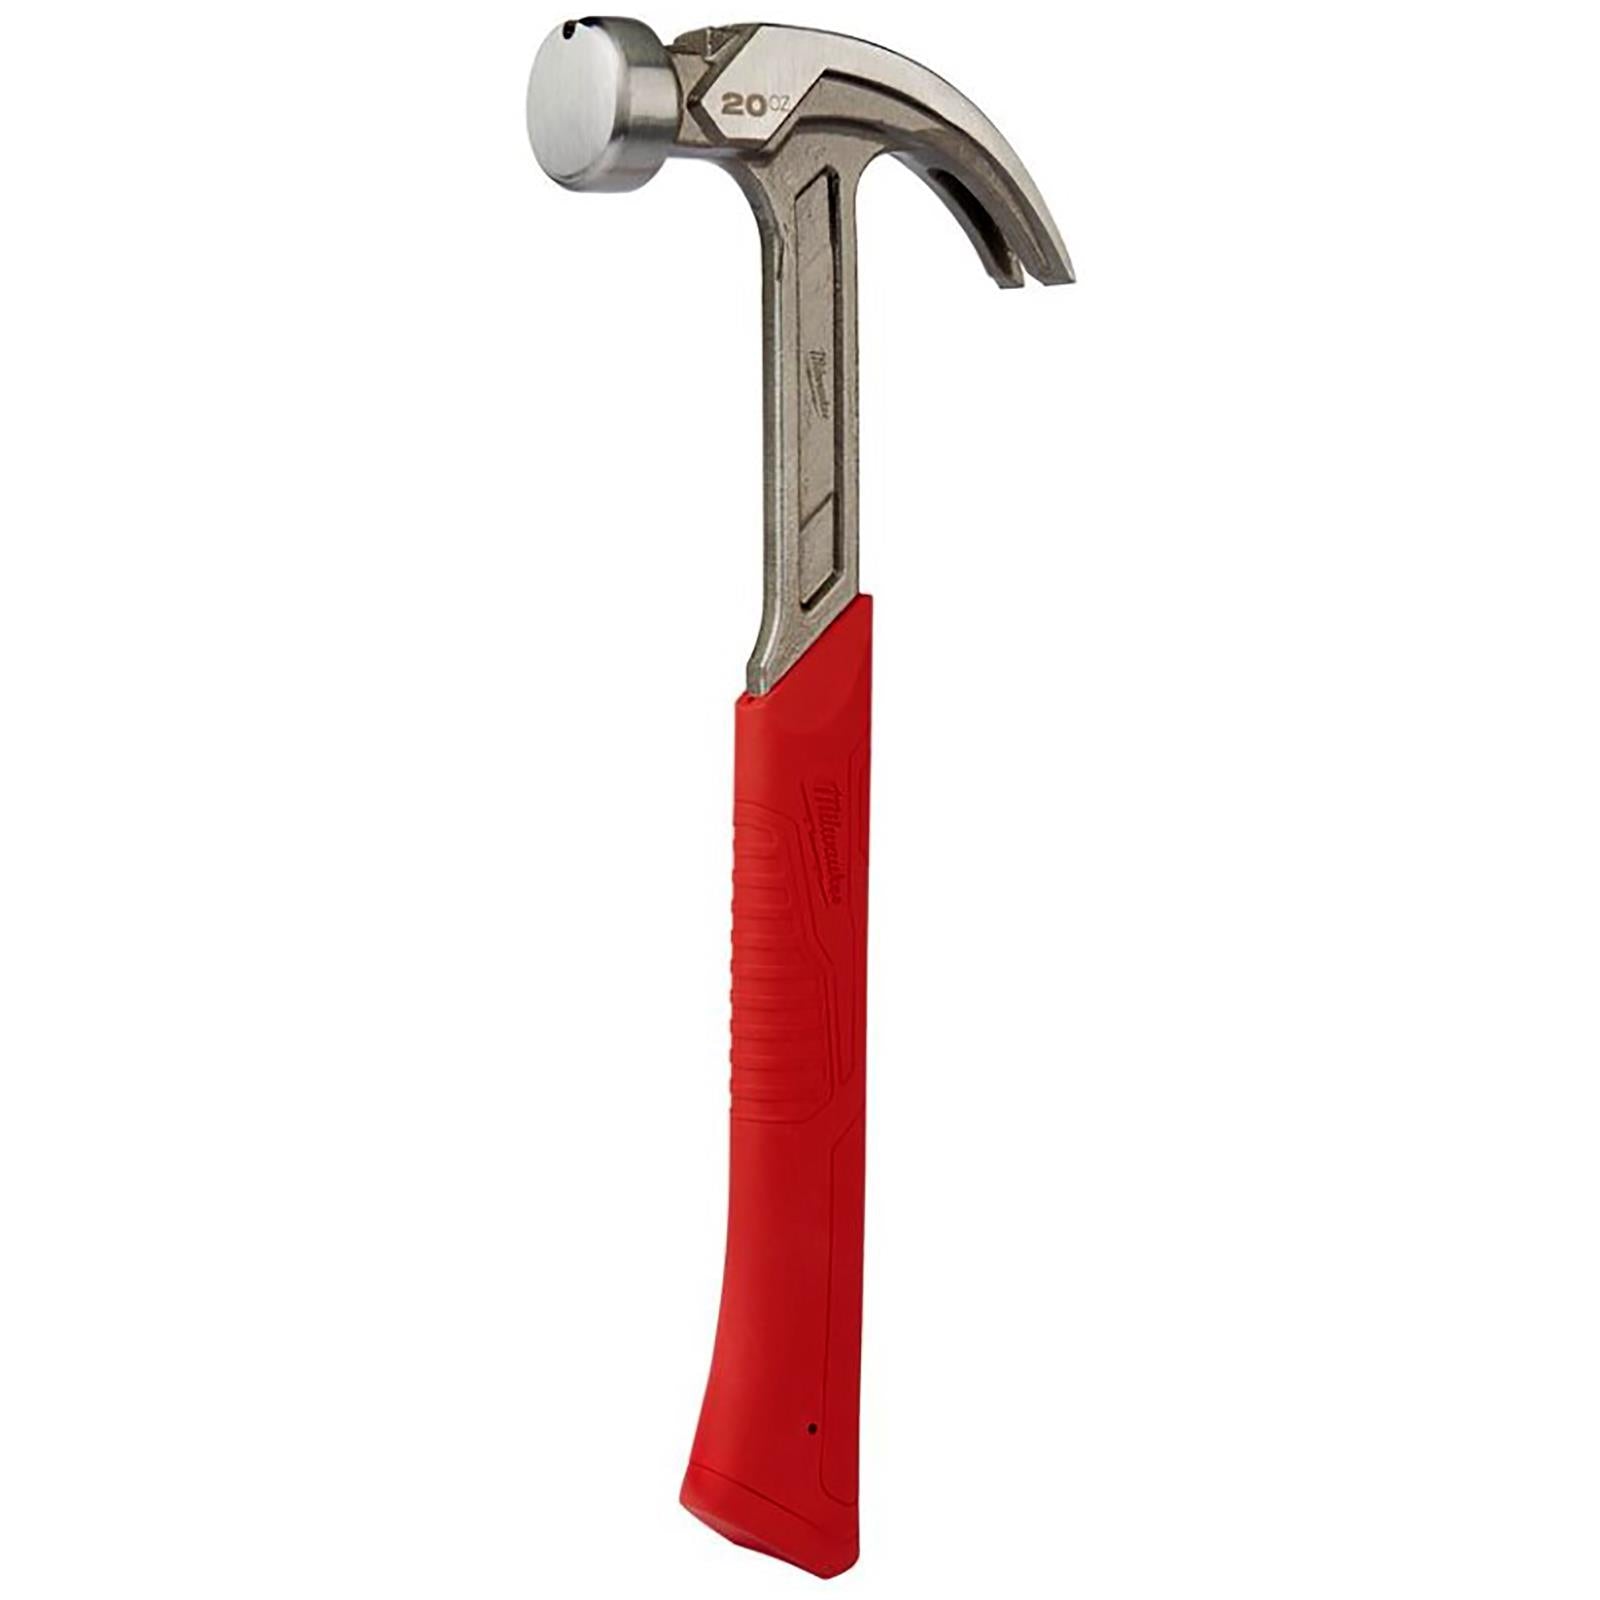 Milwaukee Curved Claw Hammer 20oz 570g I-Beam Handle